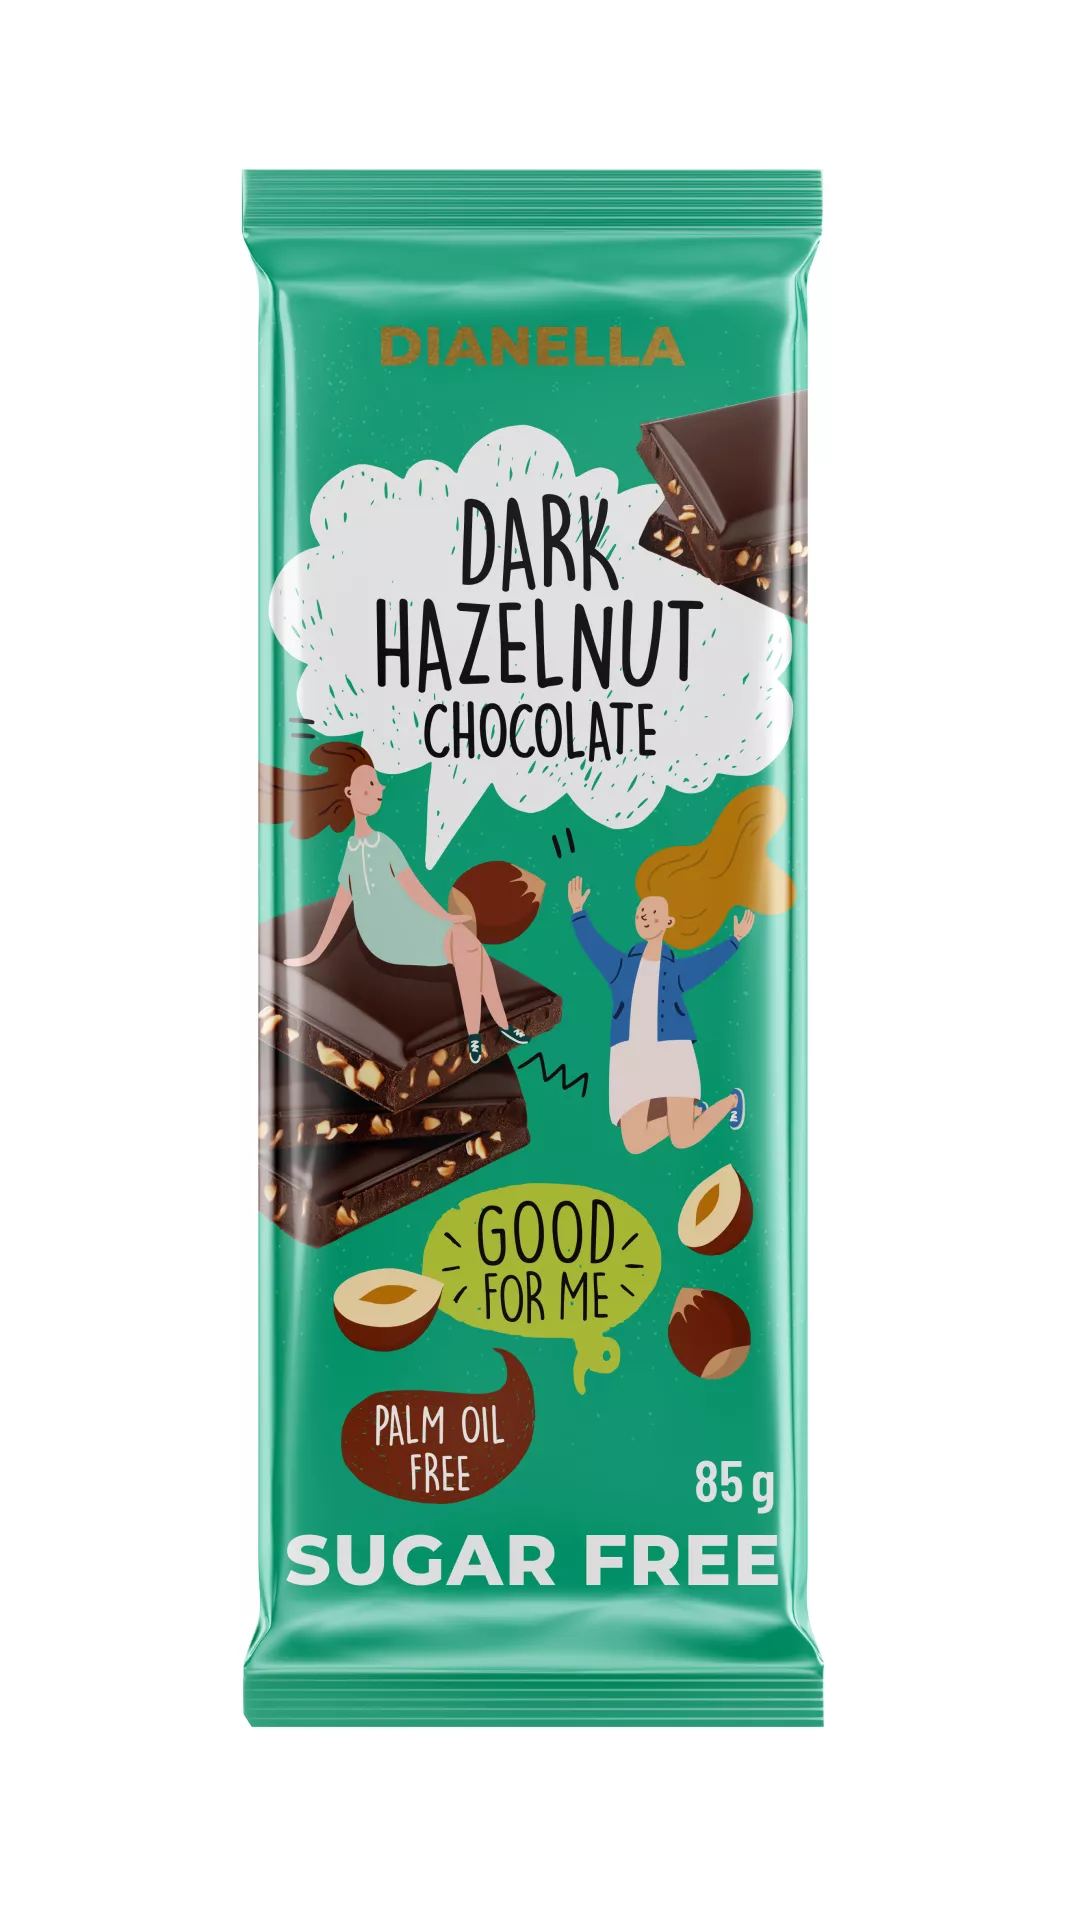 Dianella sugar free dark chocolate with hazelnuts 85 g